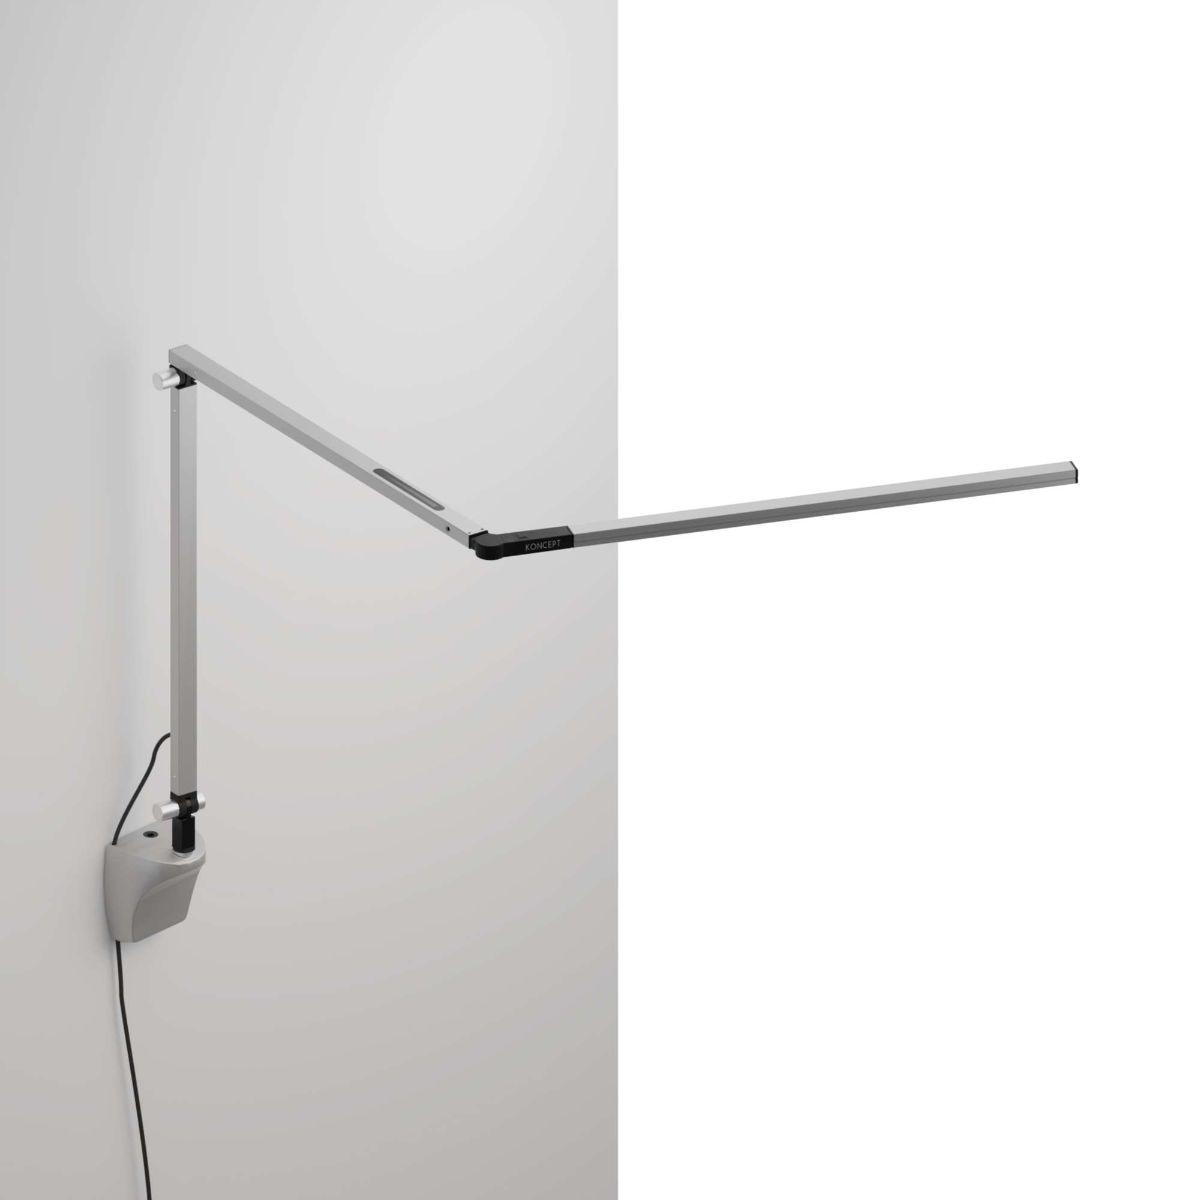 Z-Bar Slim Contemporary LED Swing Arm Wall Lamp 4500K, Silver finish